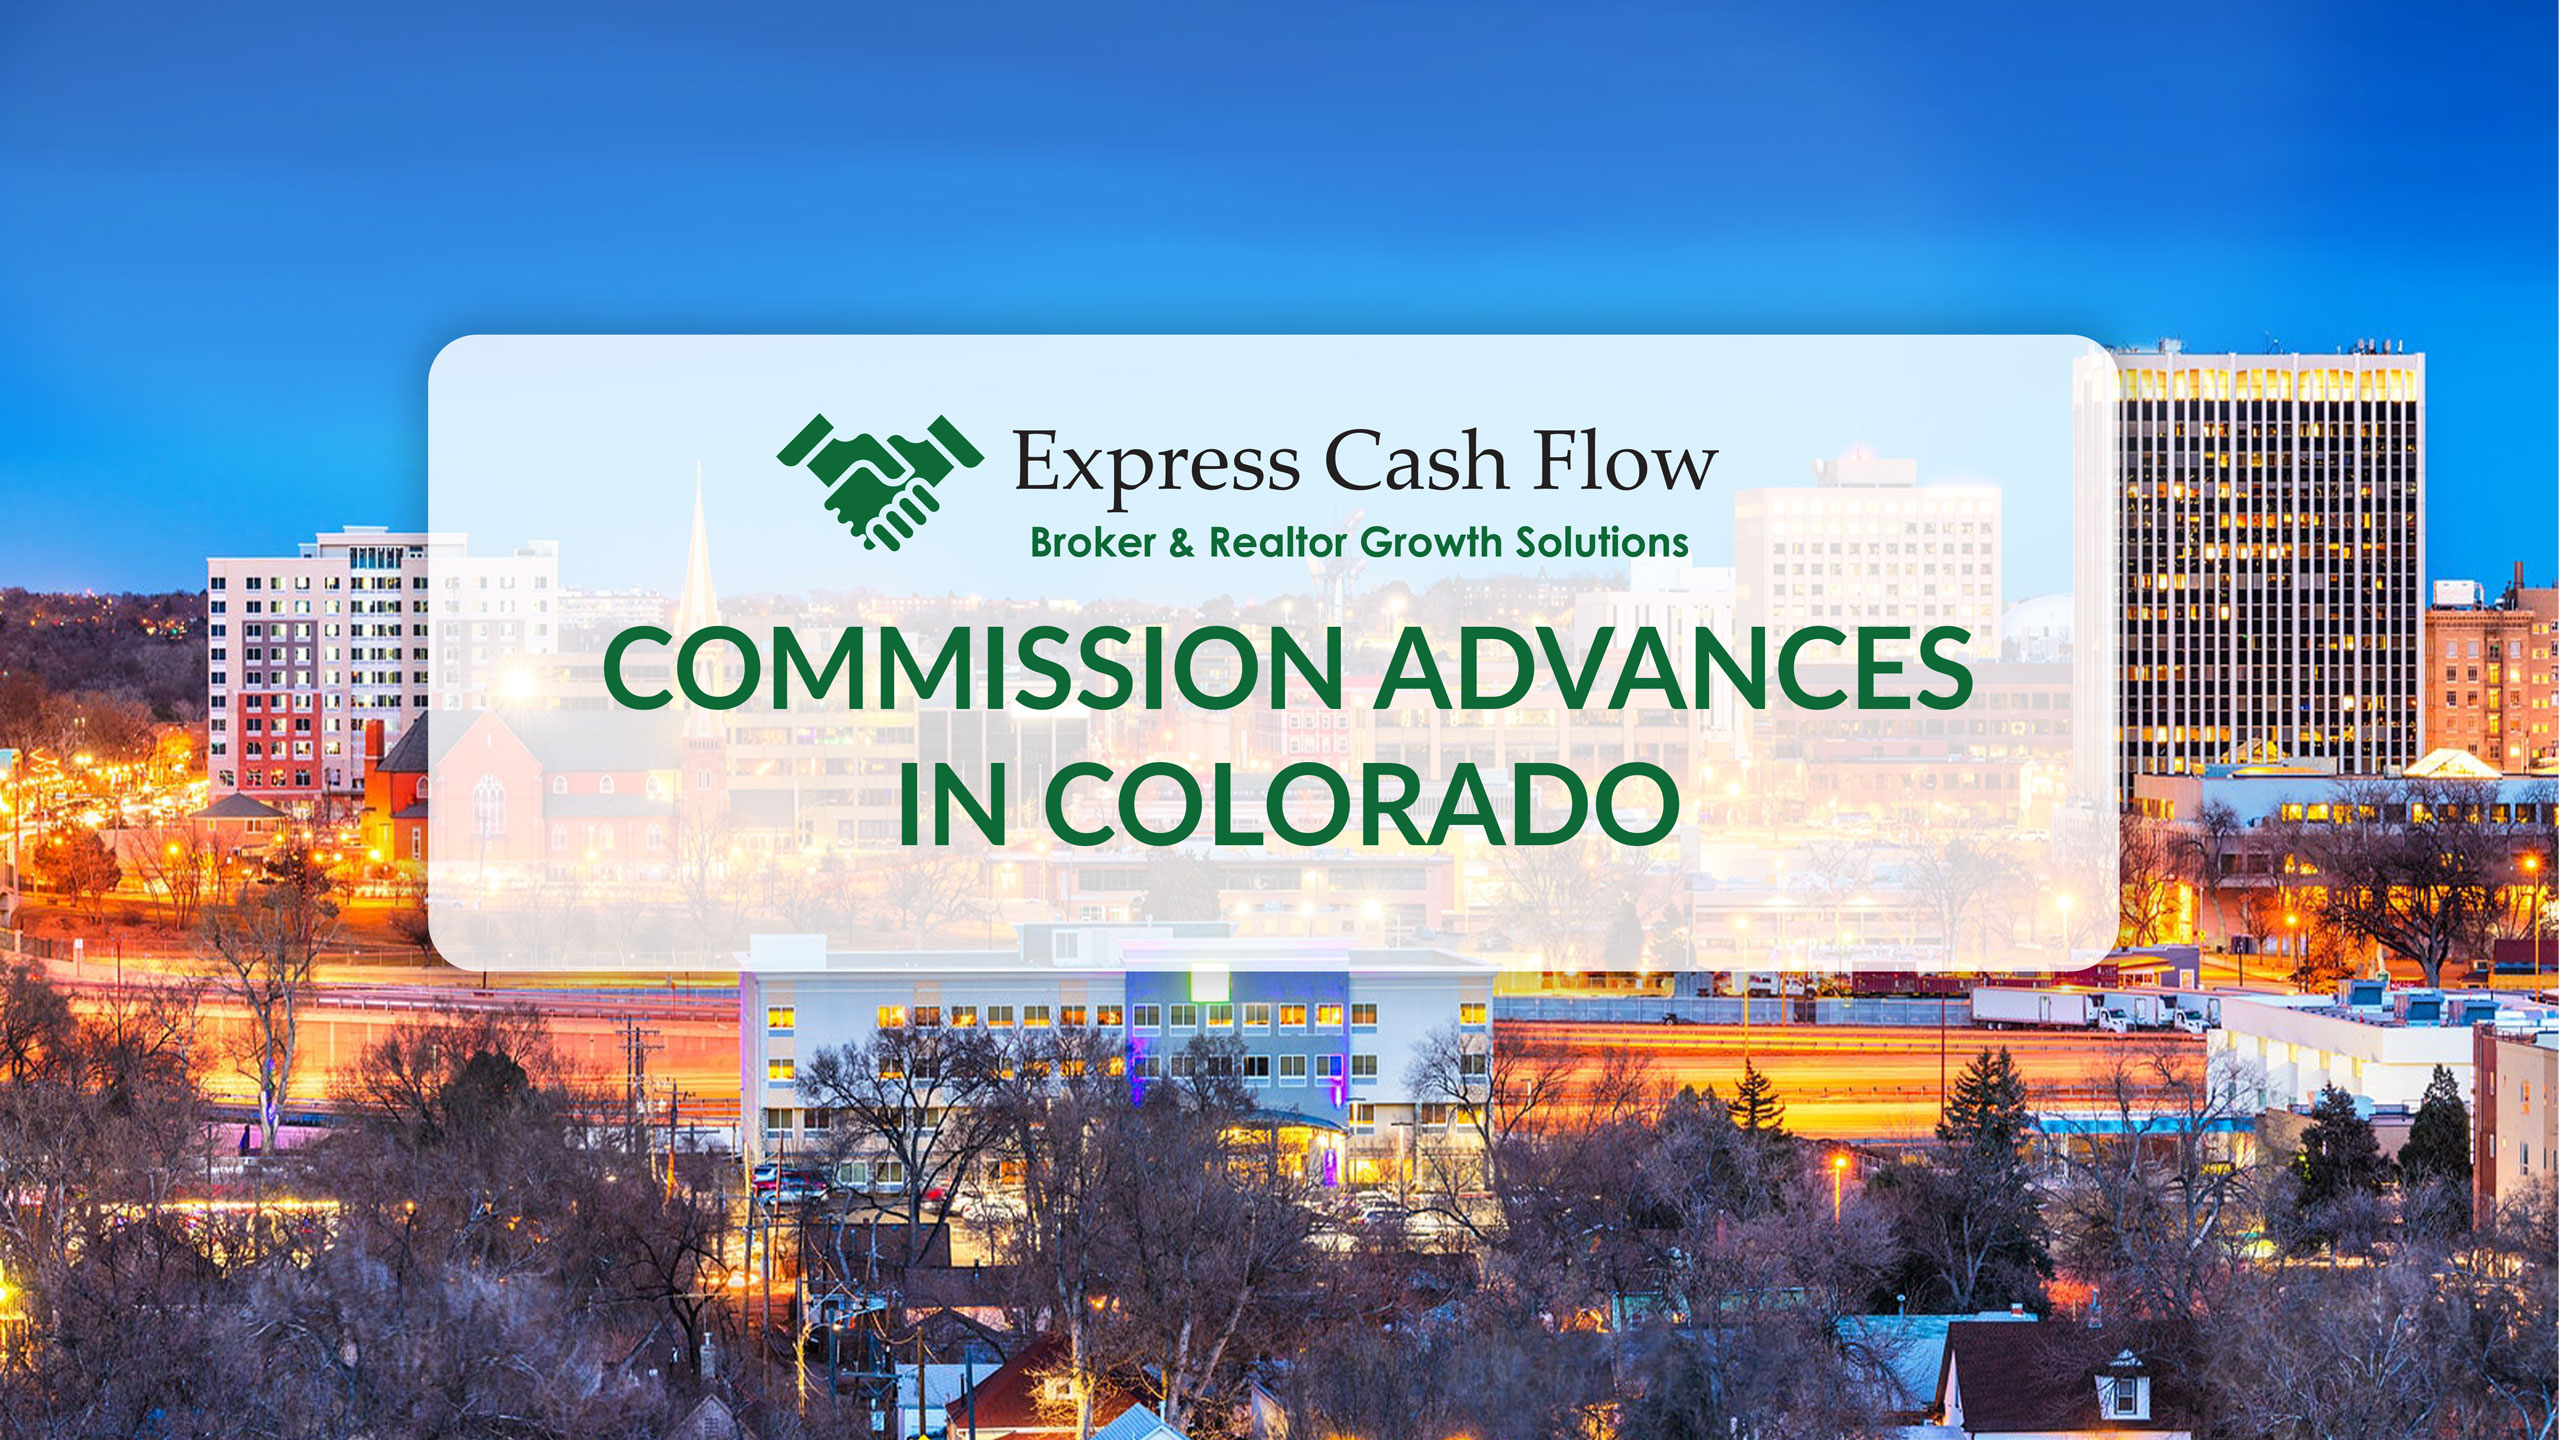 Commission-Advances-in-Colorado sign